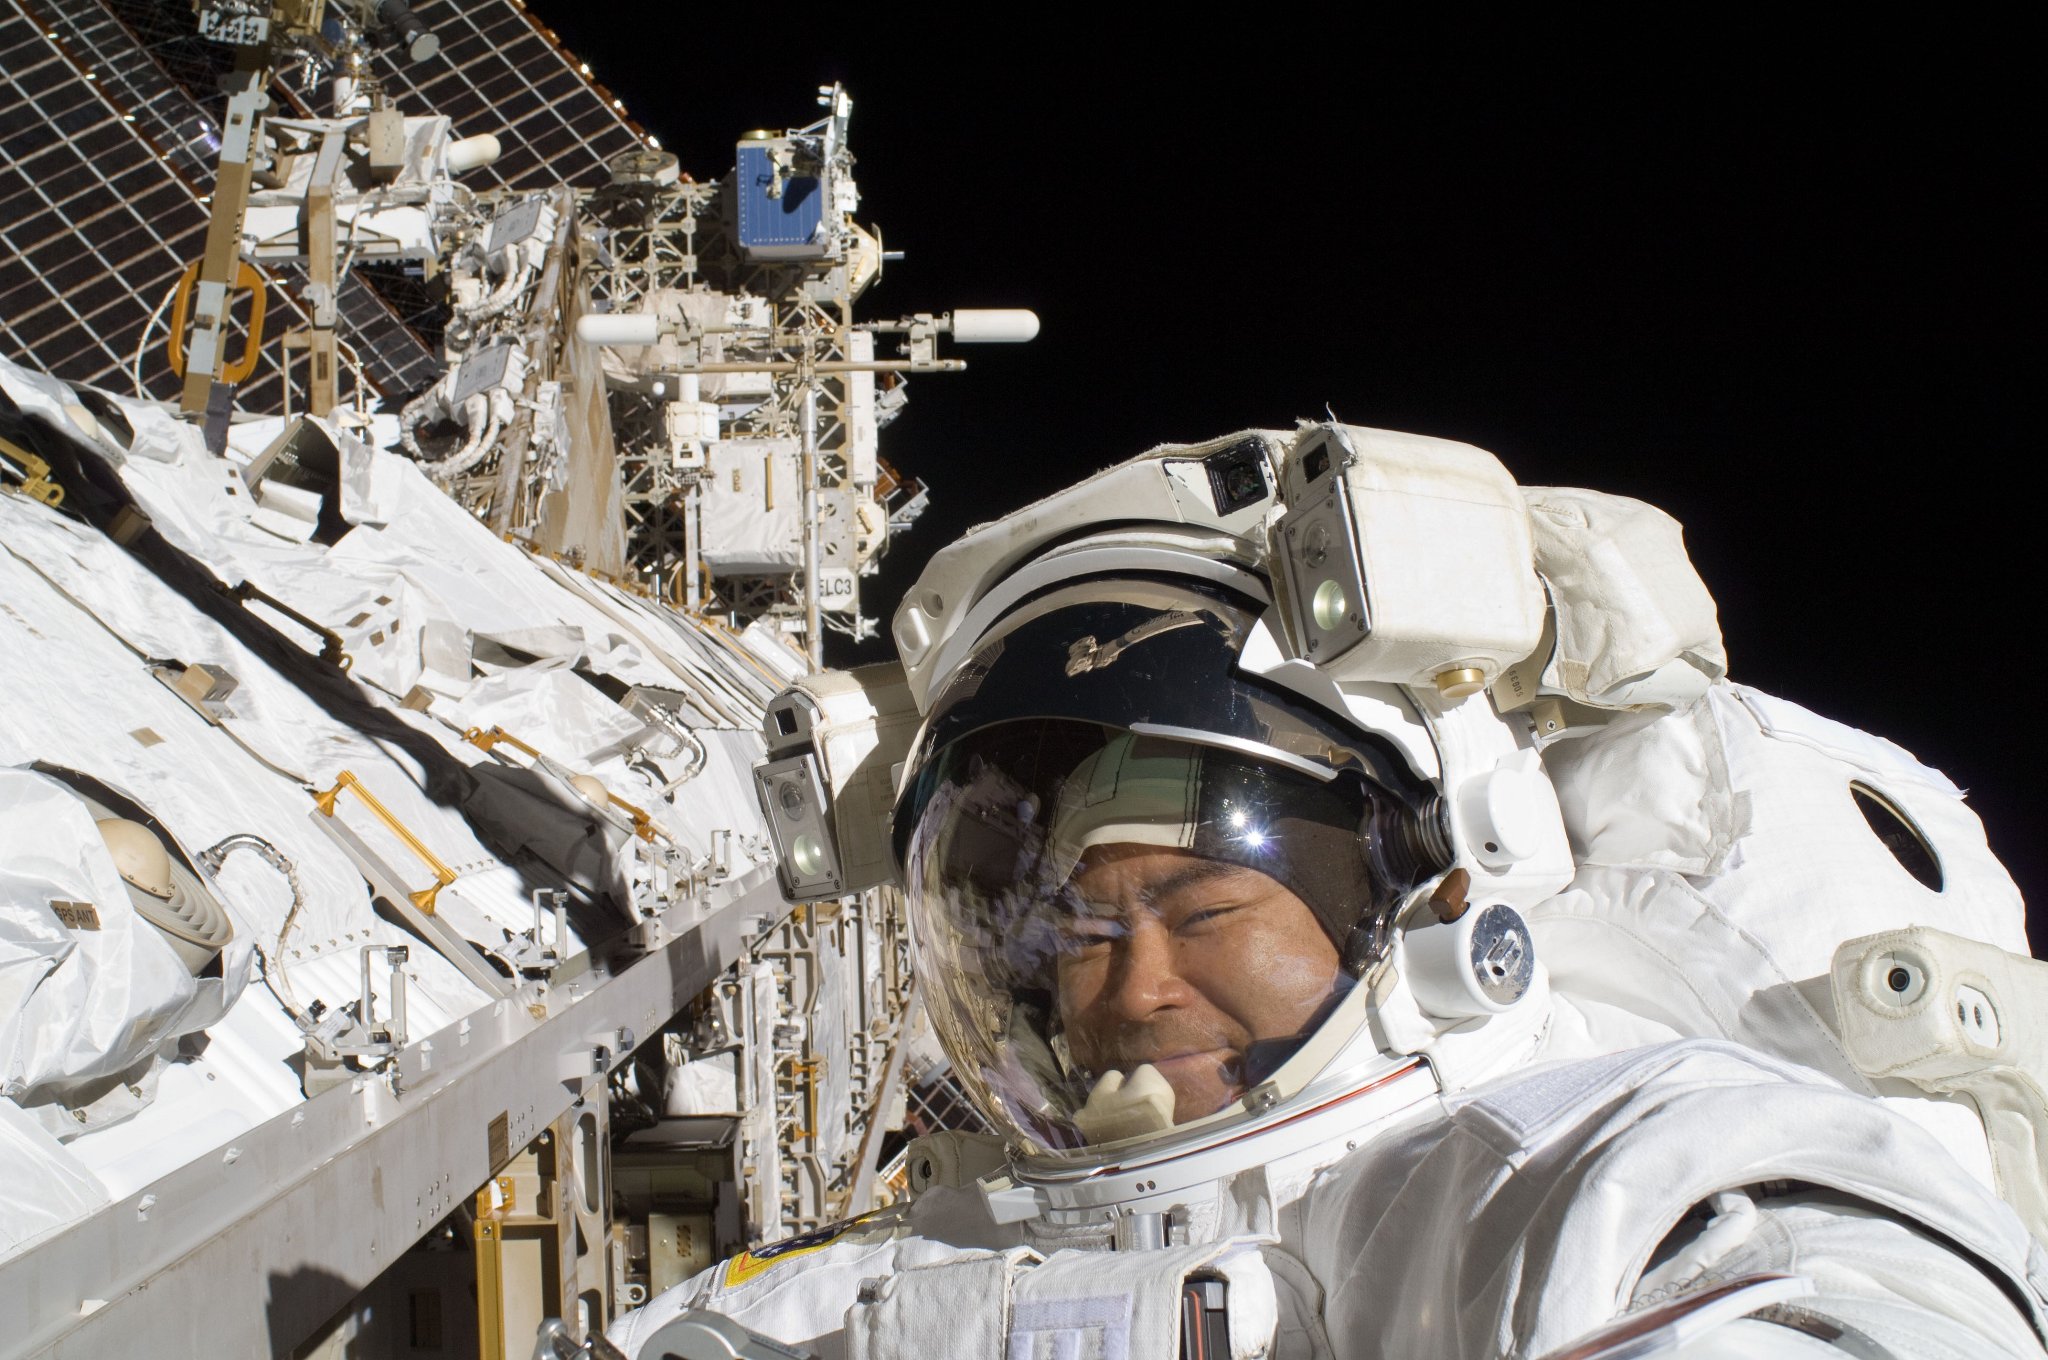 JAXA astronaut Akihiko Hoshide performs maintenance work on the International Space Station during an Expedition 32 spacewalk. A